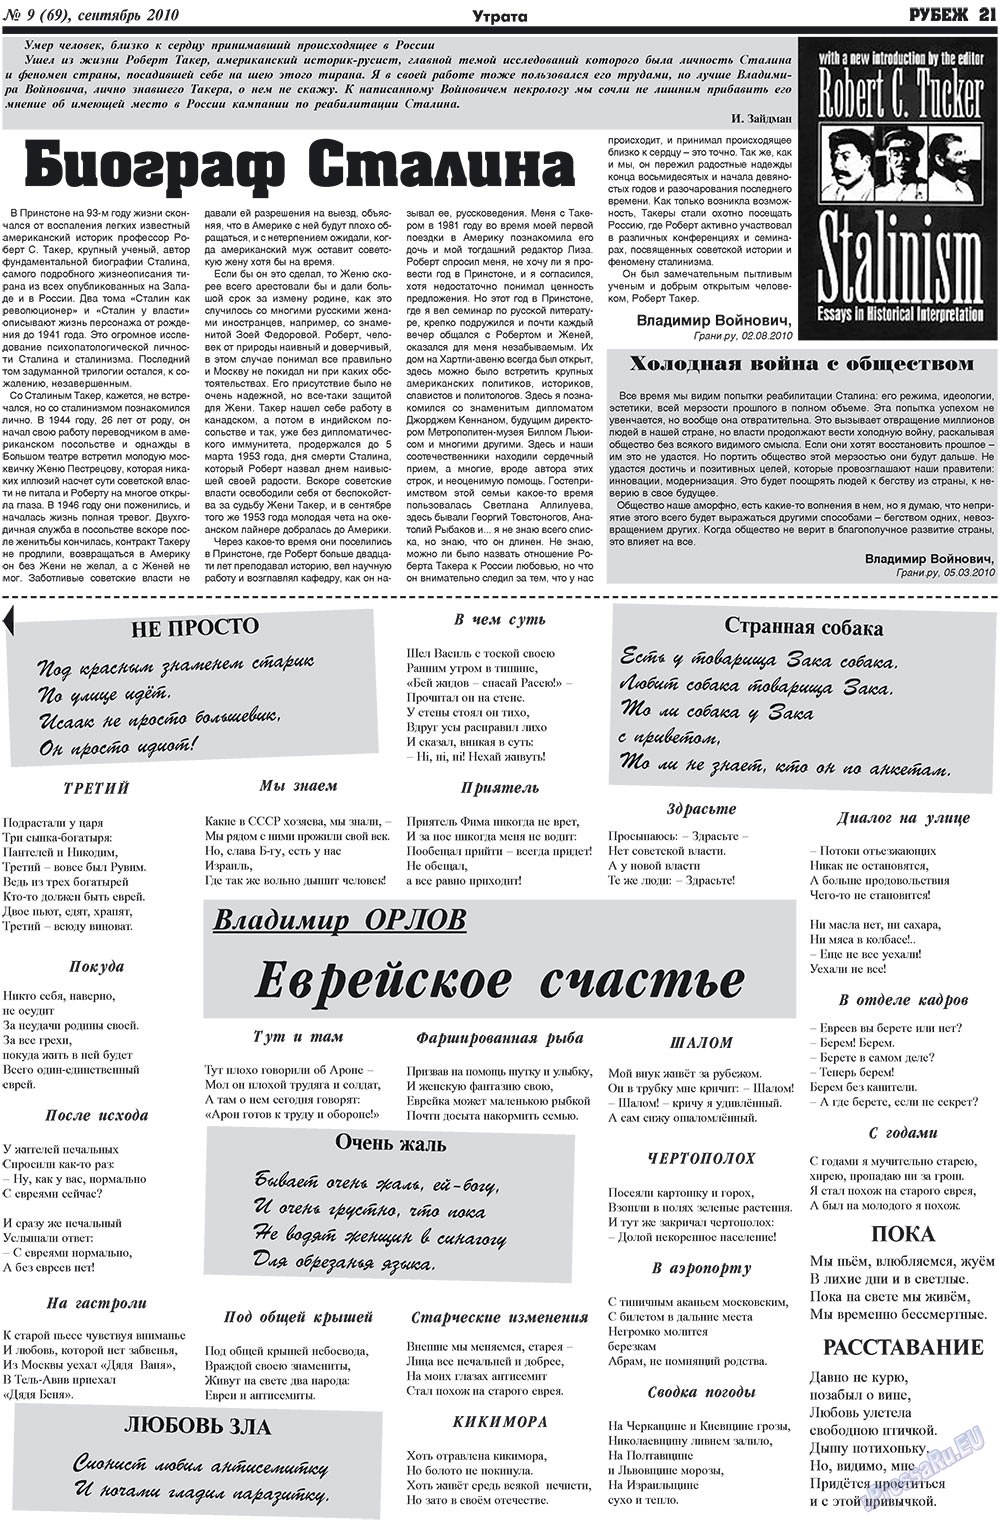 Рубеж, газета. 2010 №9 стр.21